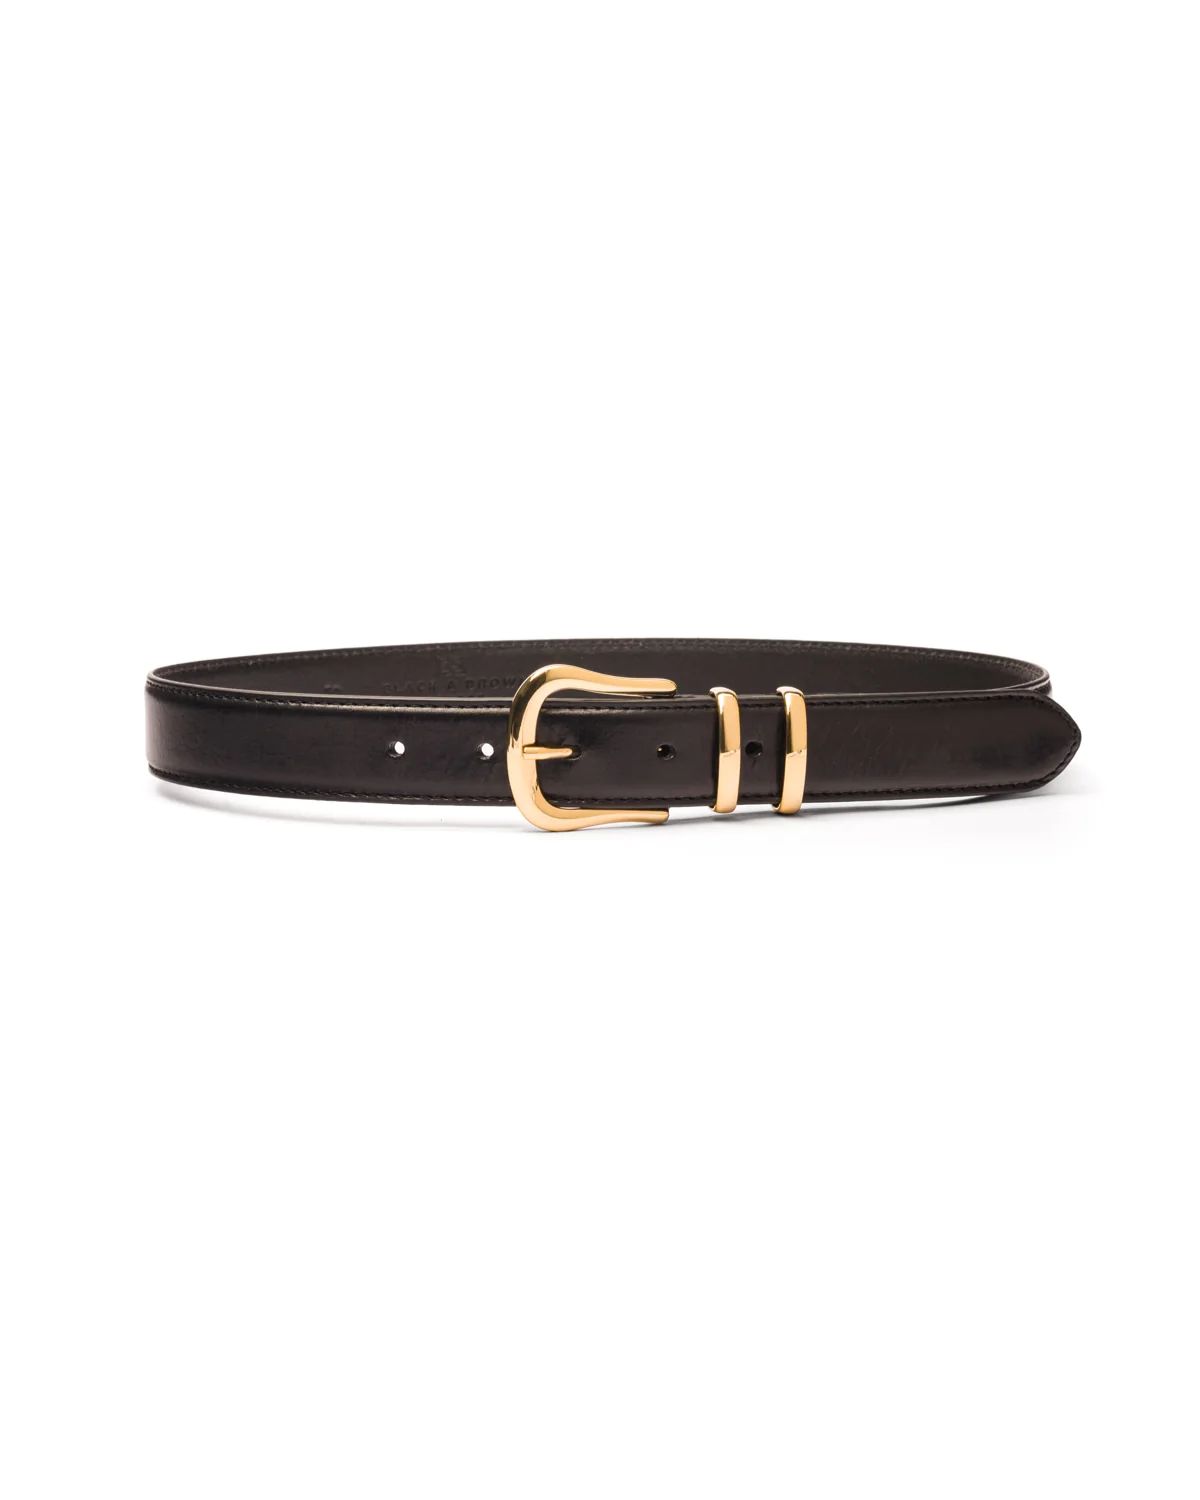 Marina II slim black leather waist belt | Black & Brown London